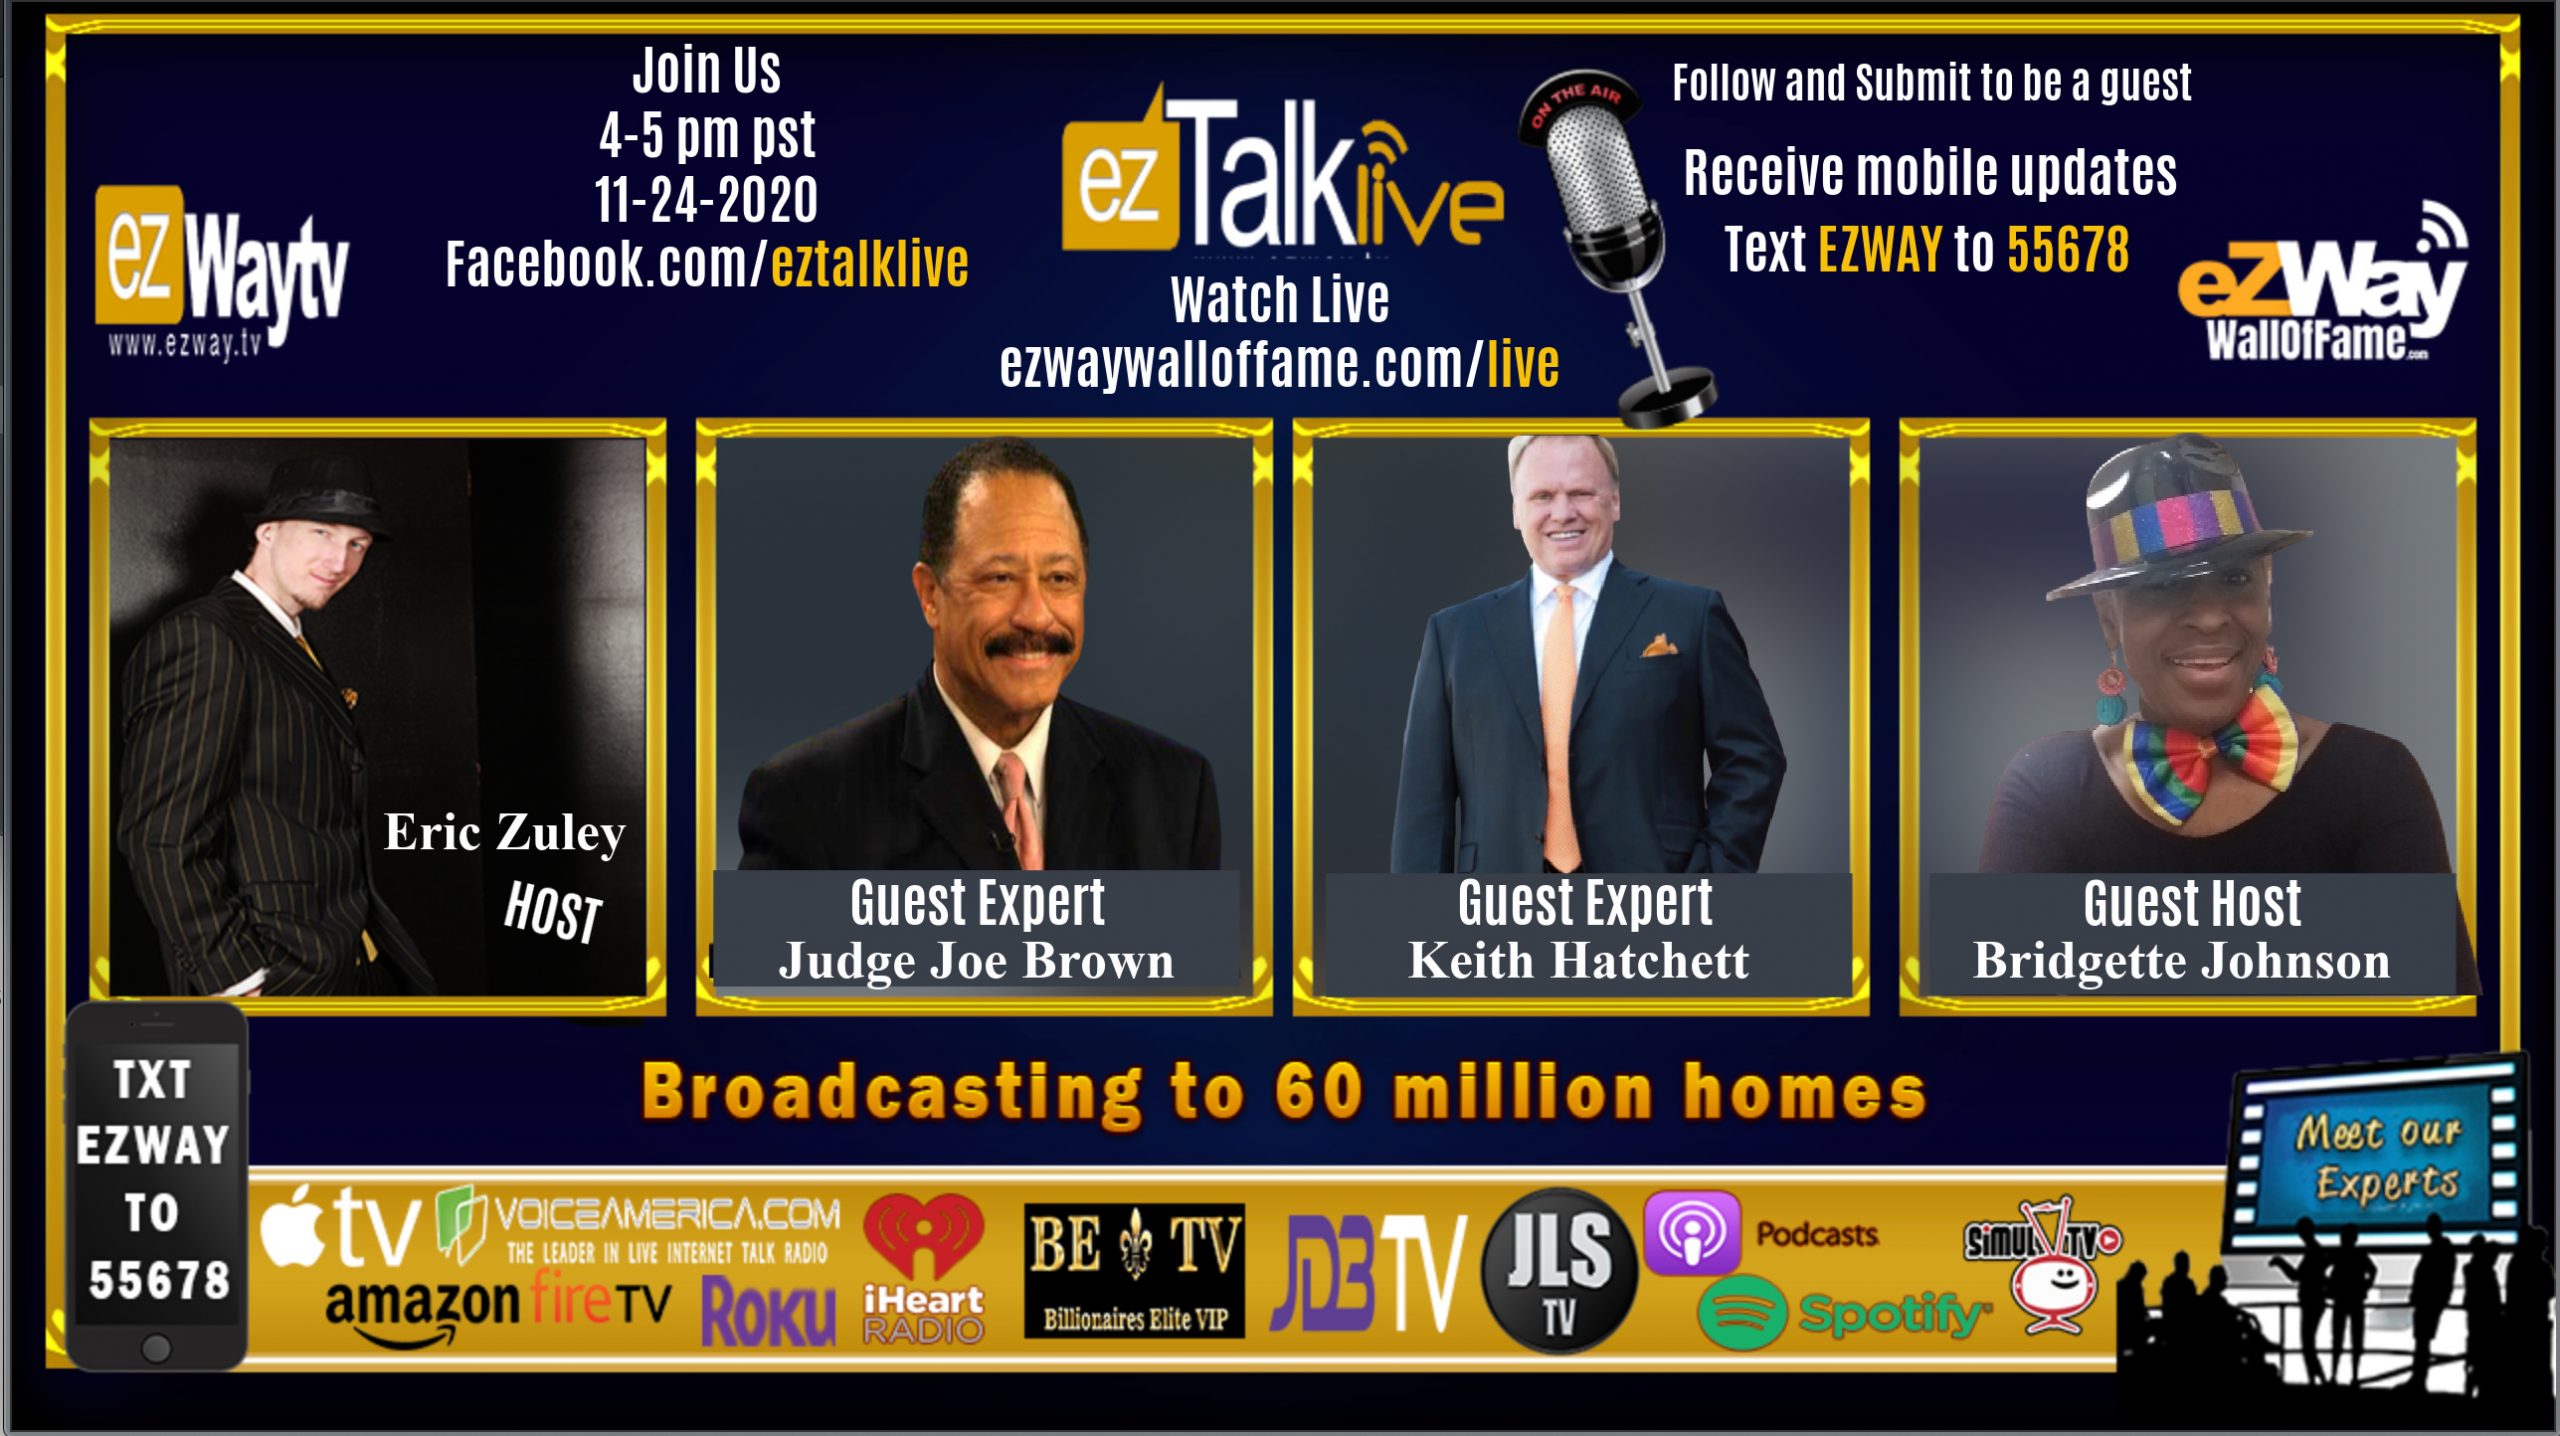 EZ TALK LIVE 12-01-2020 Judge Joe Brown, Keith Hatchett LeasePal